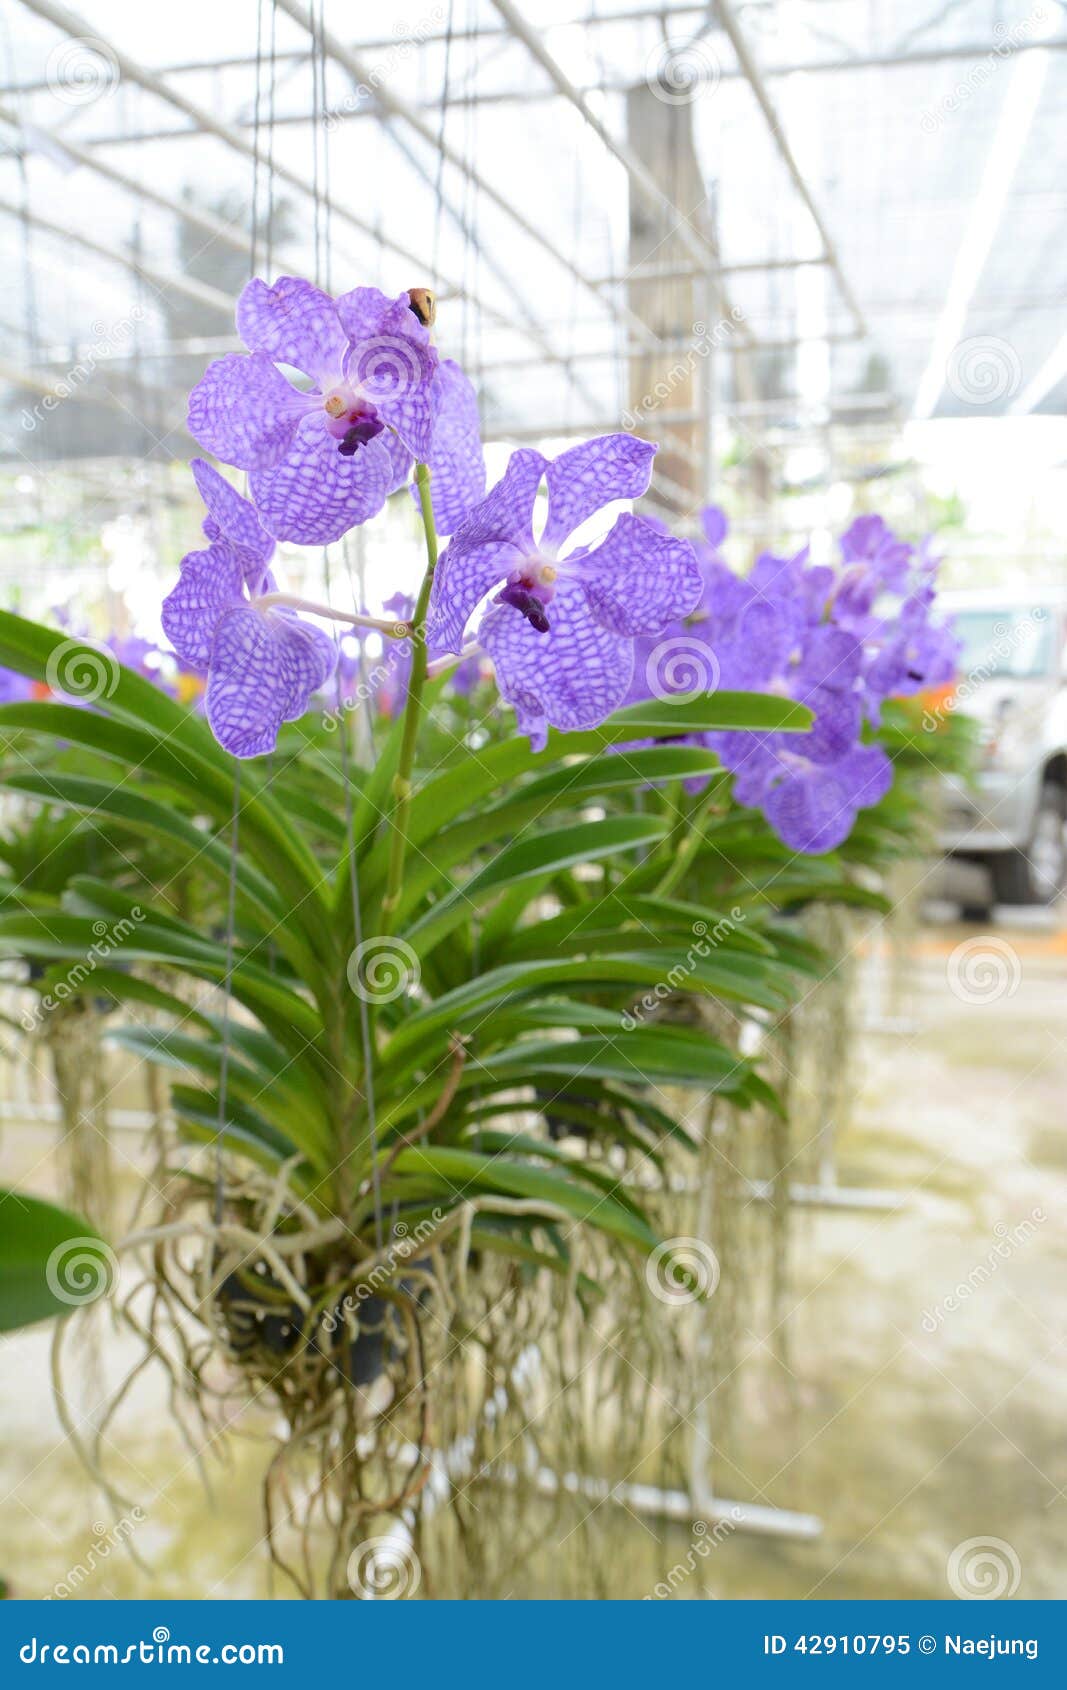 Violet vanda orchid stock image. Image of freshness, beauty - 42910795